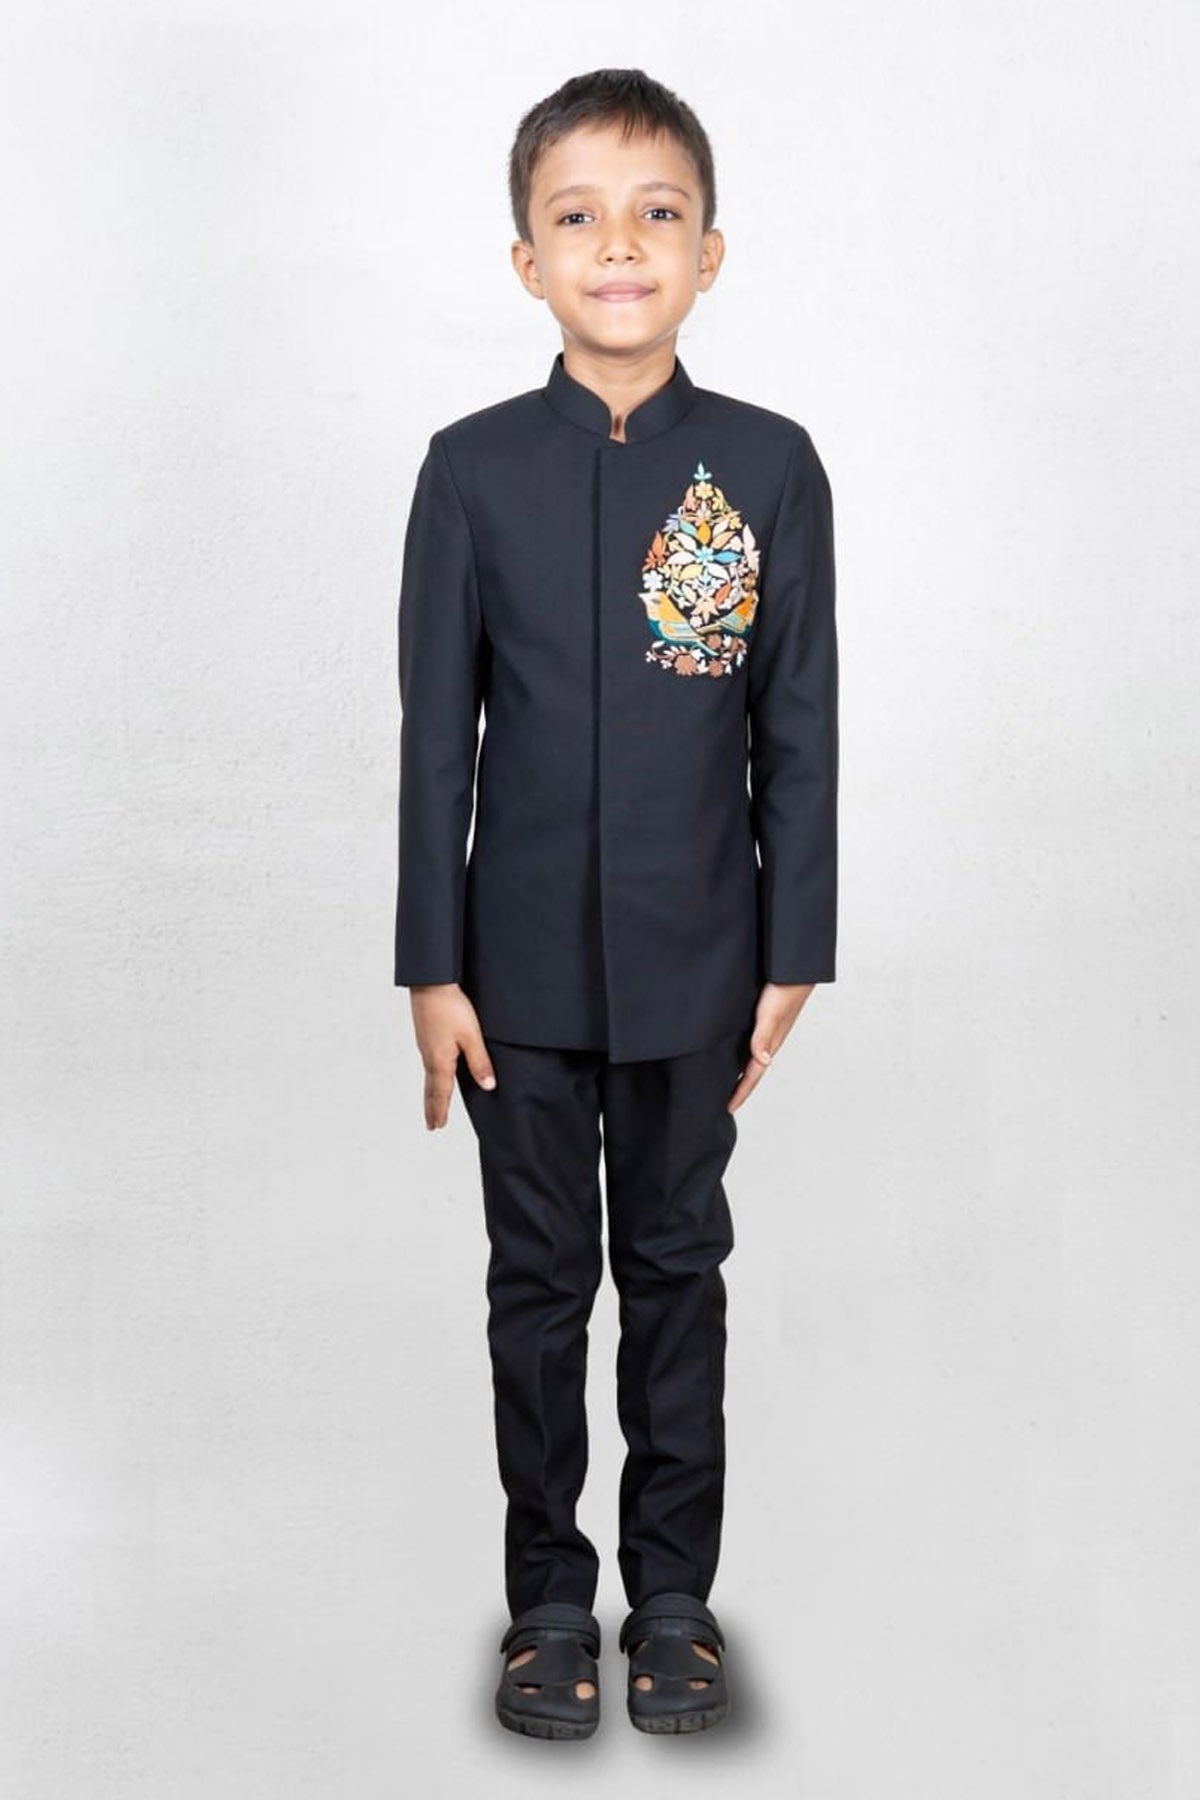 Designer Little Brats Bird Embroidered Black Suit For Kids Available online at ScrollnShops